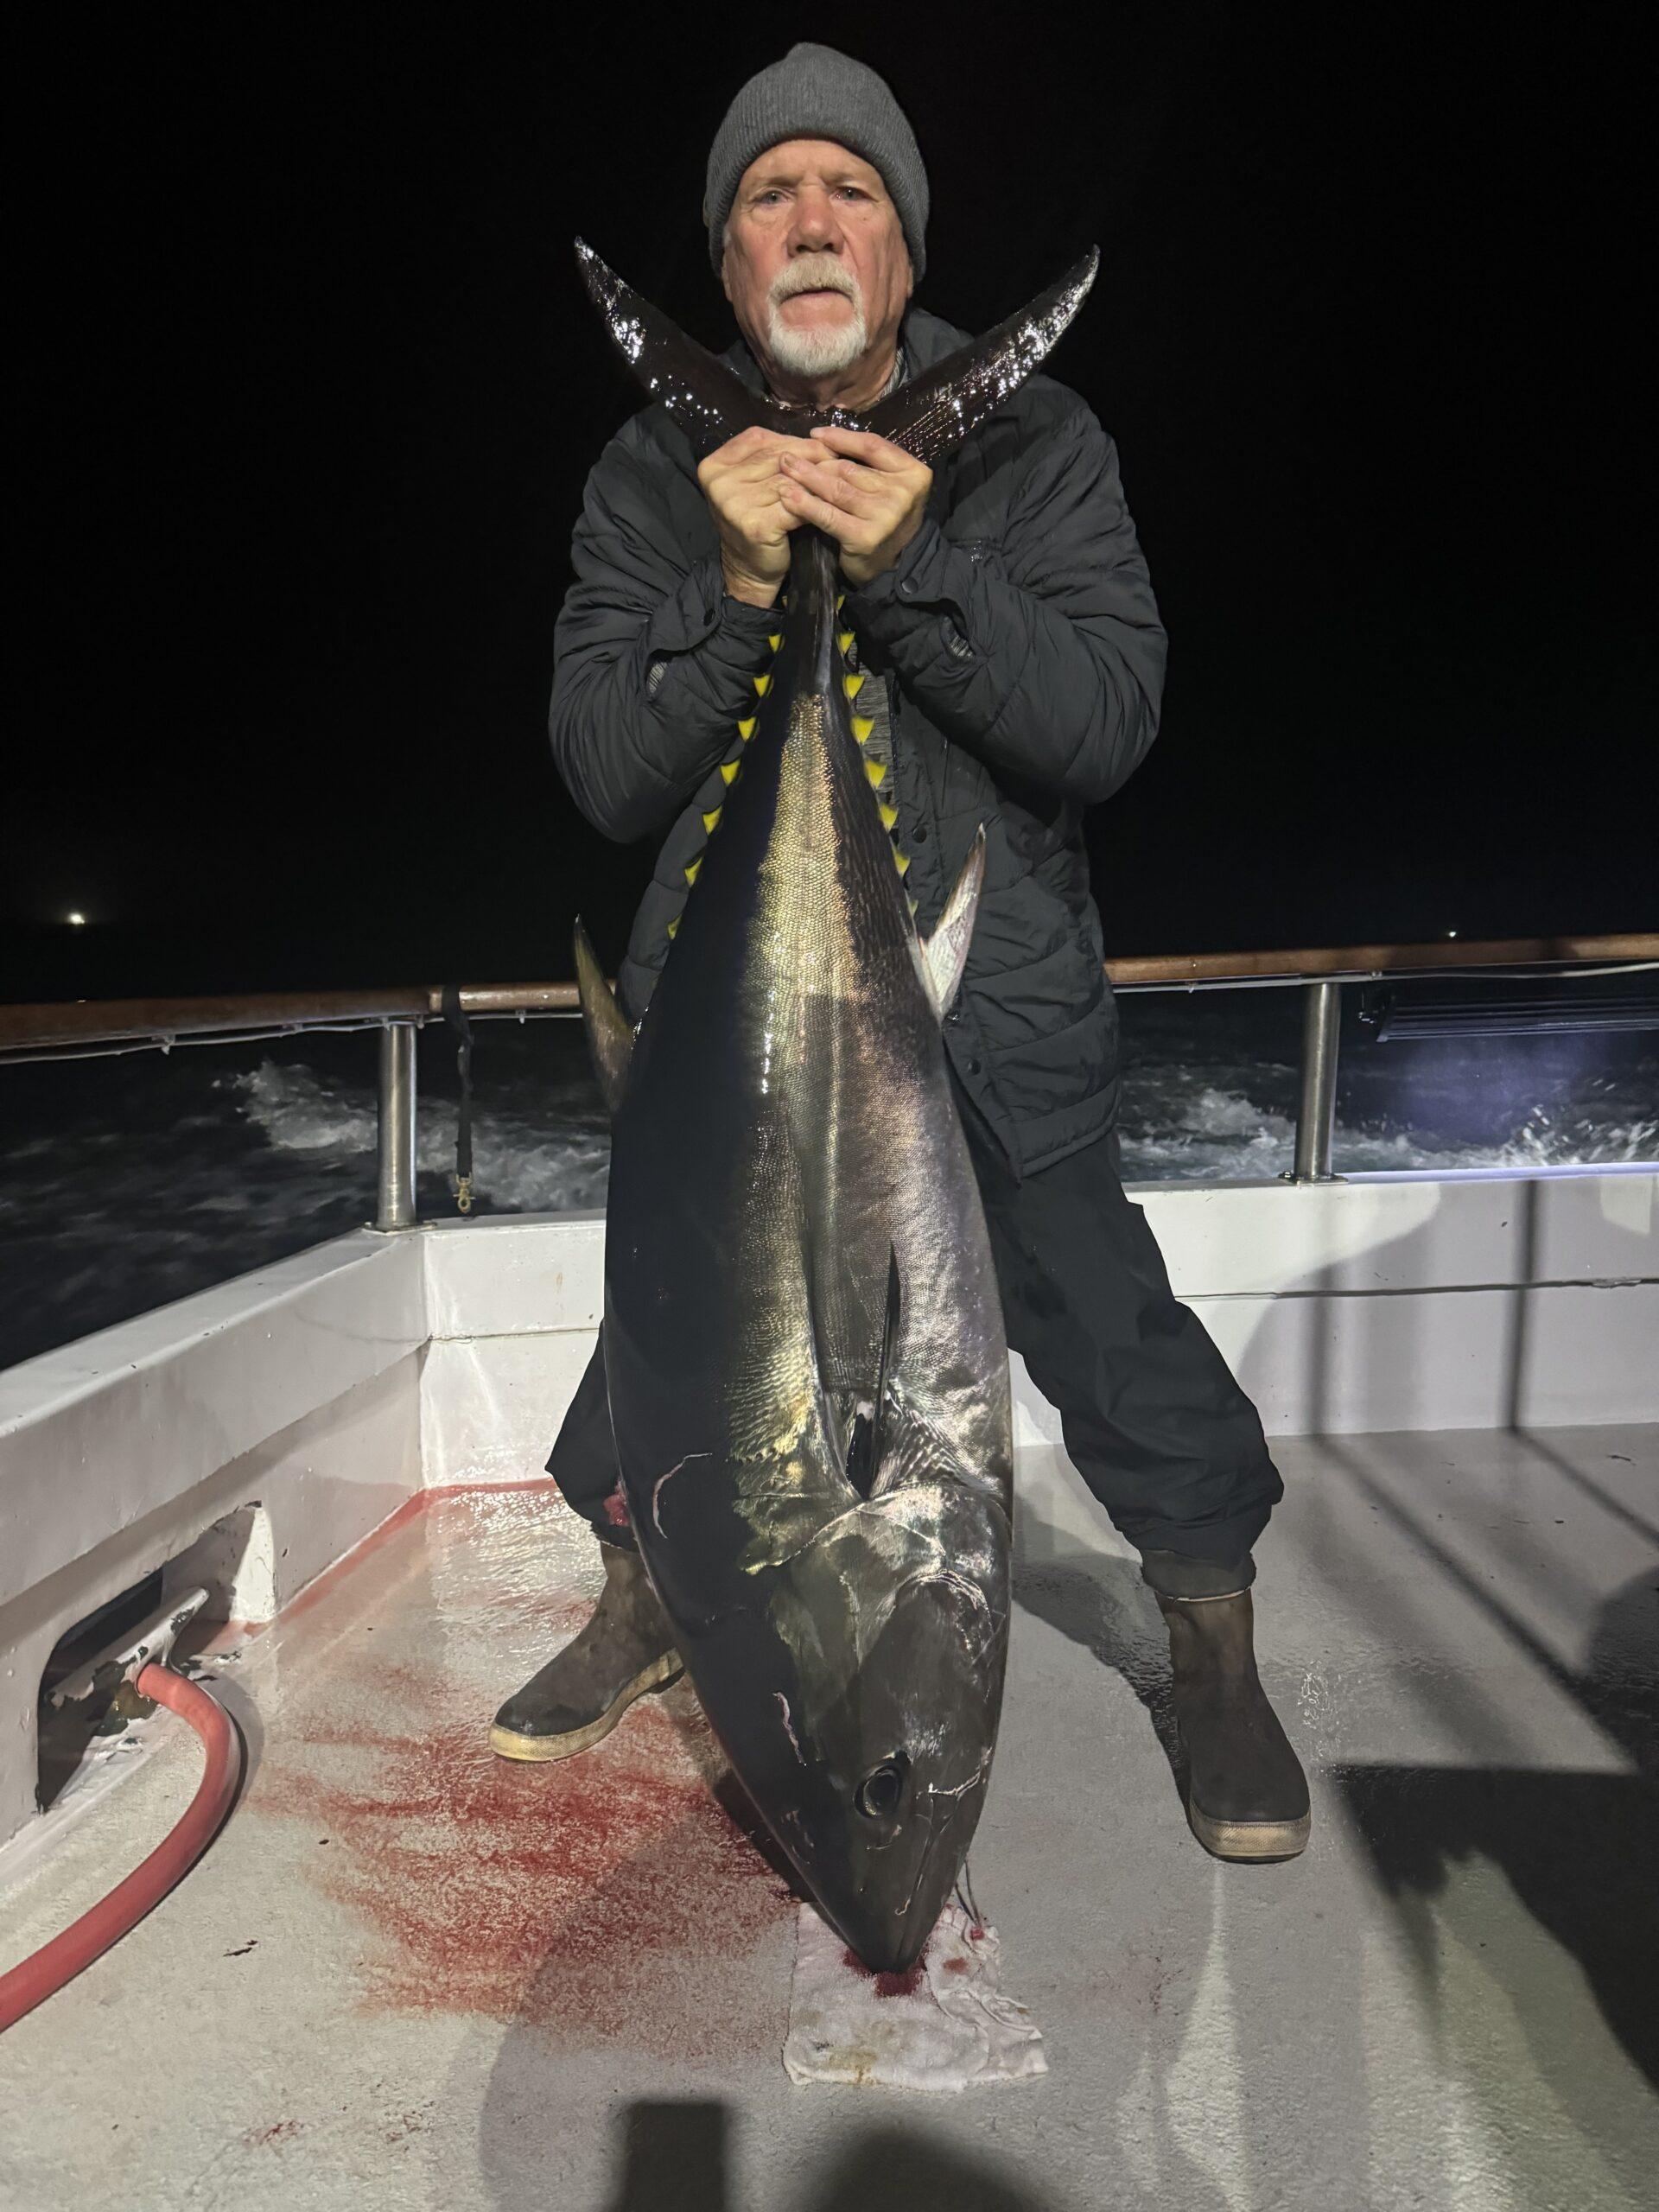 Angler with 100-pound bluefin tuna.